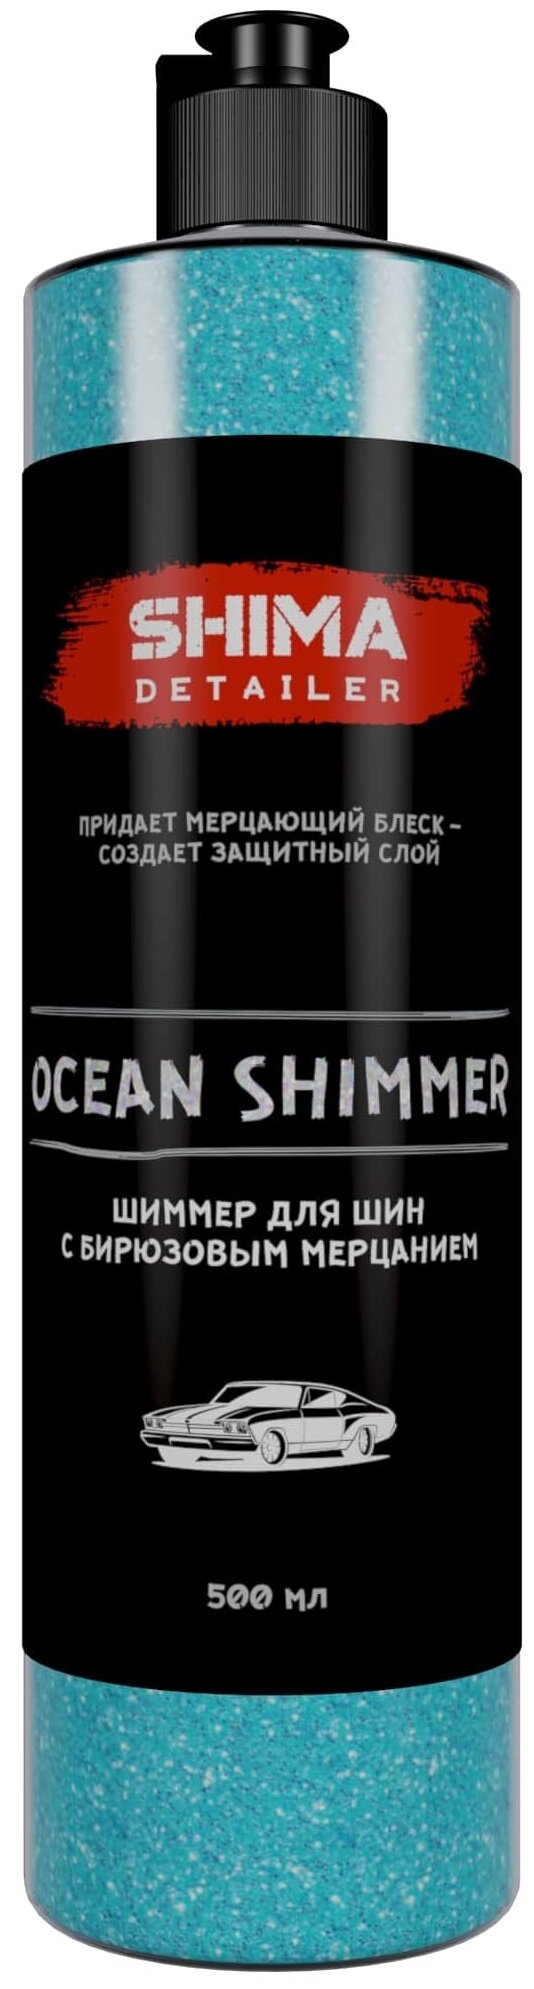 SHIMA DETAILER OCEAN SHIMMER Шиммер для шин с бирюзовым мерцанием